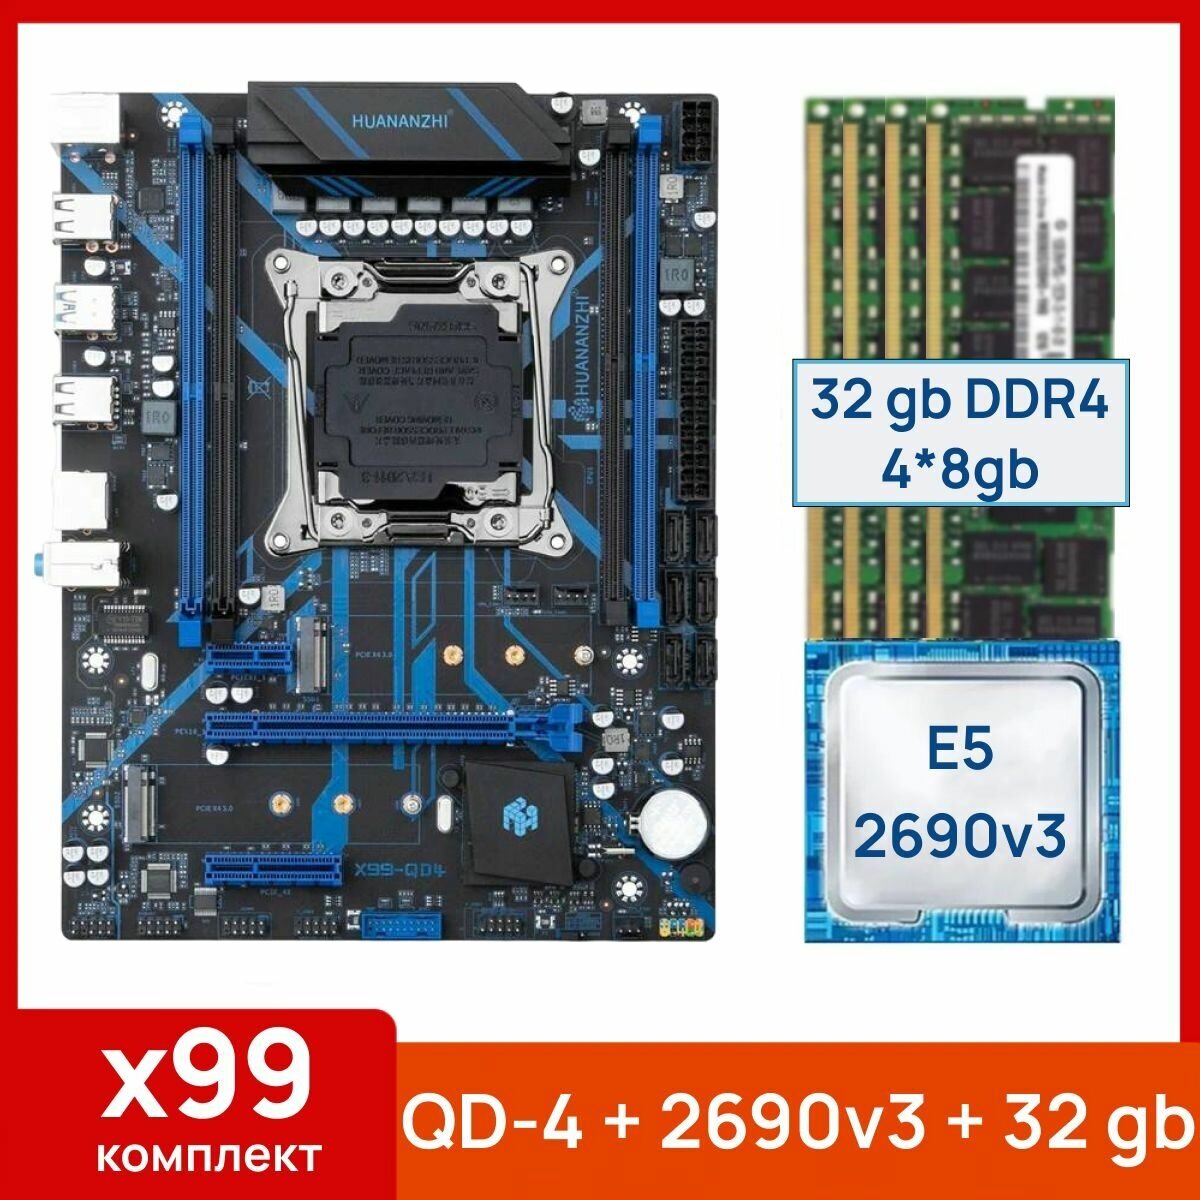 Комплект: Huananjhi X99 QD-4 + Xeon E5 2690v3 + 32 gb(4x8gb) DDR4 ecc reg